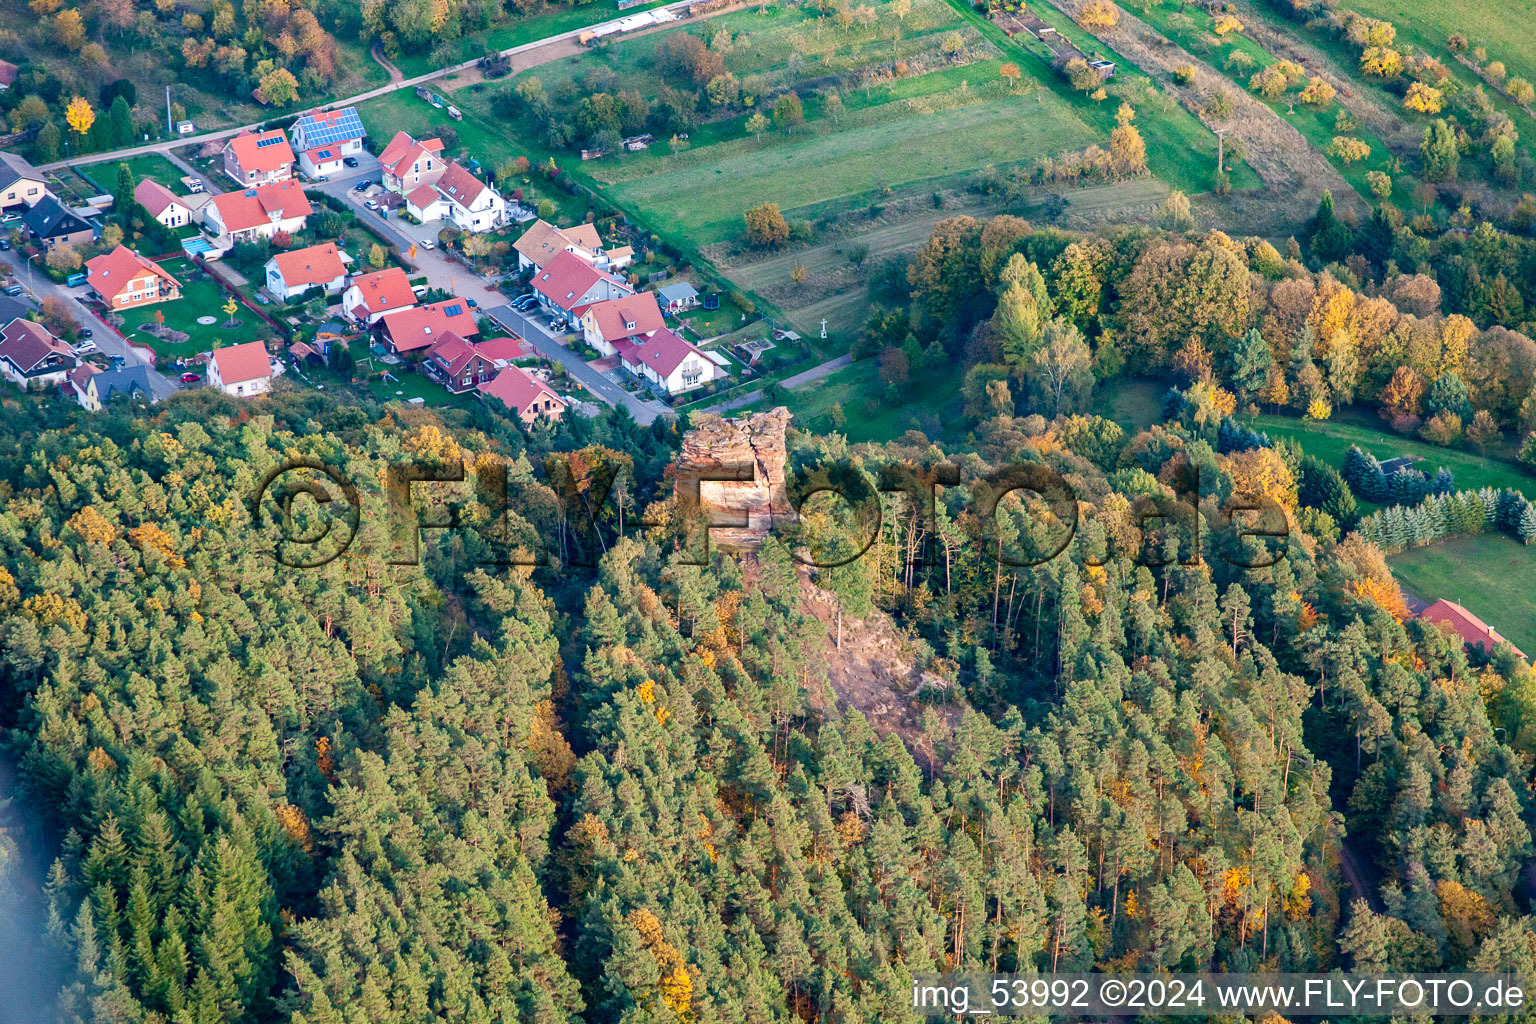 Aerial view of Kriemhildenstein in the district Gossersweiler in Gossersweiler-Stein in the state Rhineland-Palatinate, Germany